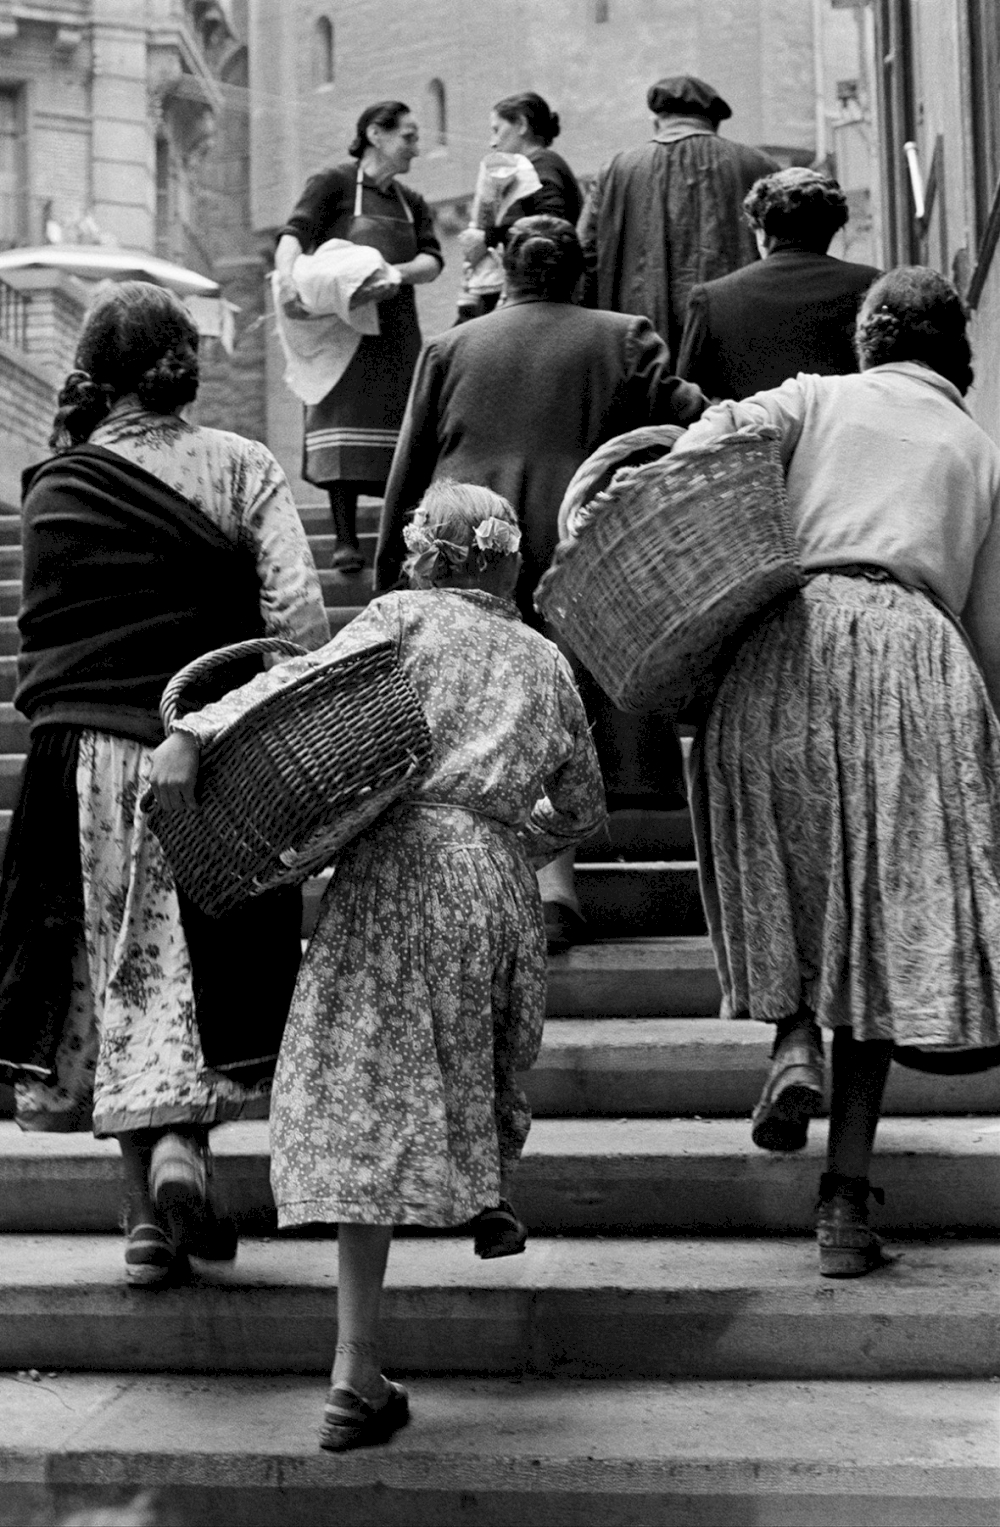 SPAIN. Pamplona. During the festival of San Fermin. 1954. © Inge Morath / Magnum Photos / courtesy CLAIRbyKahn